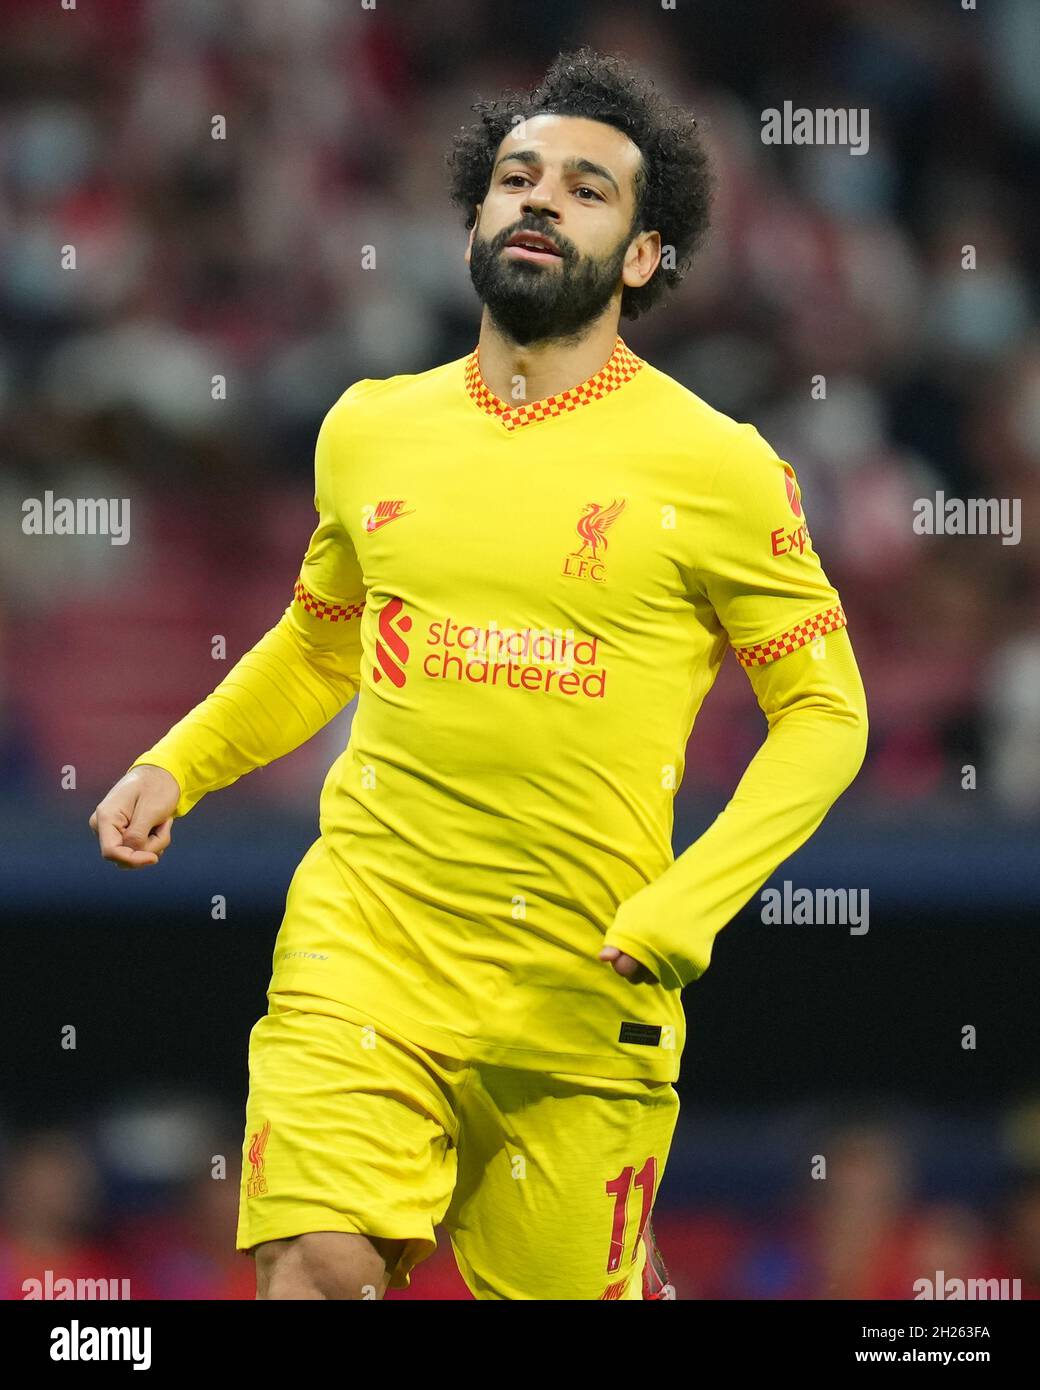 Mohamed Salah of Liverpool FC during the La Liga match between